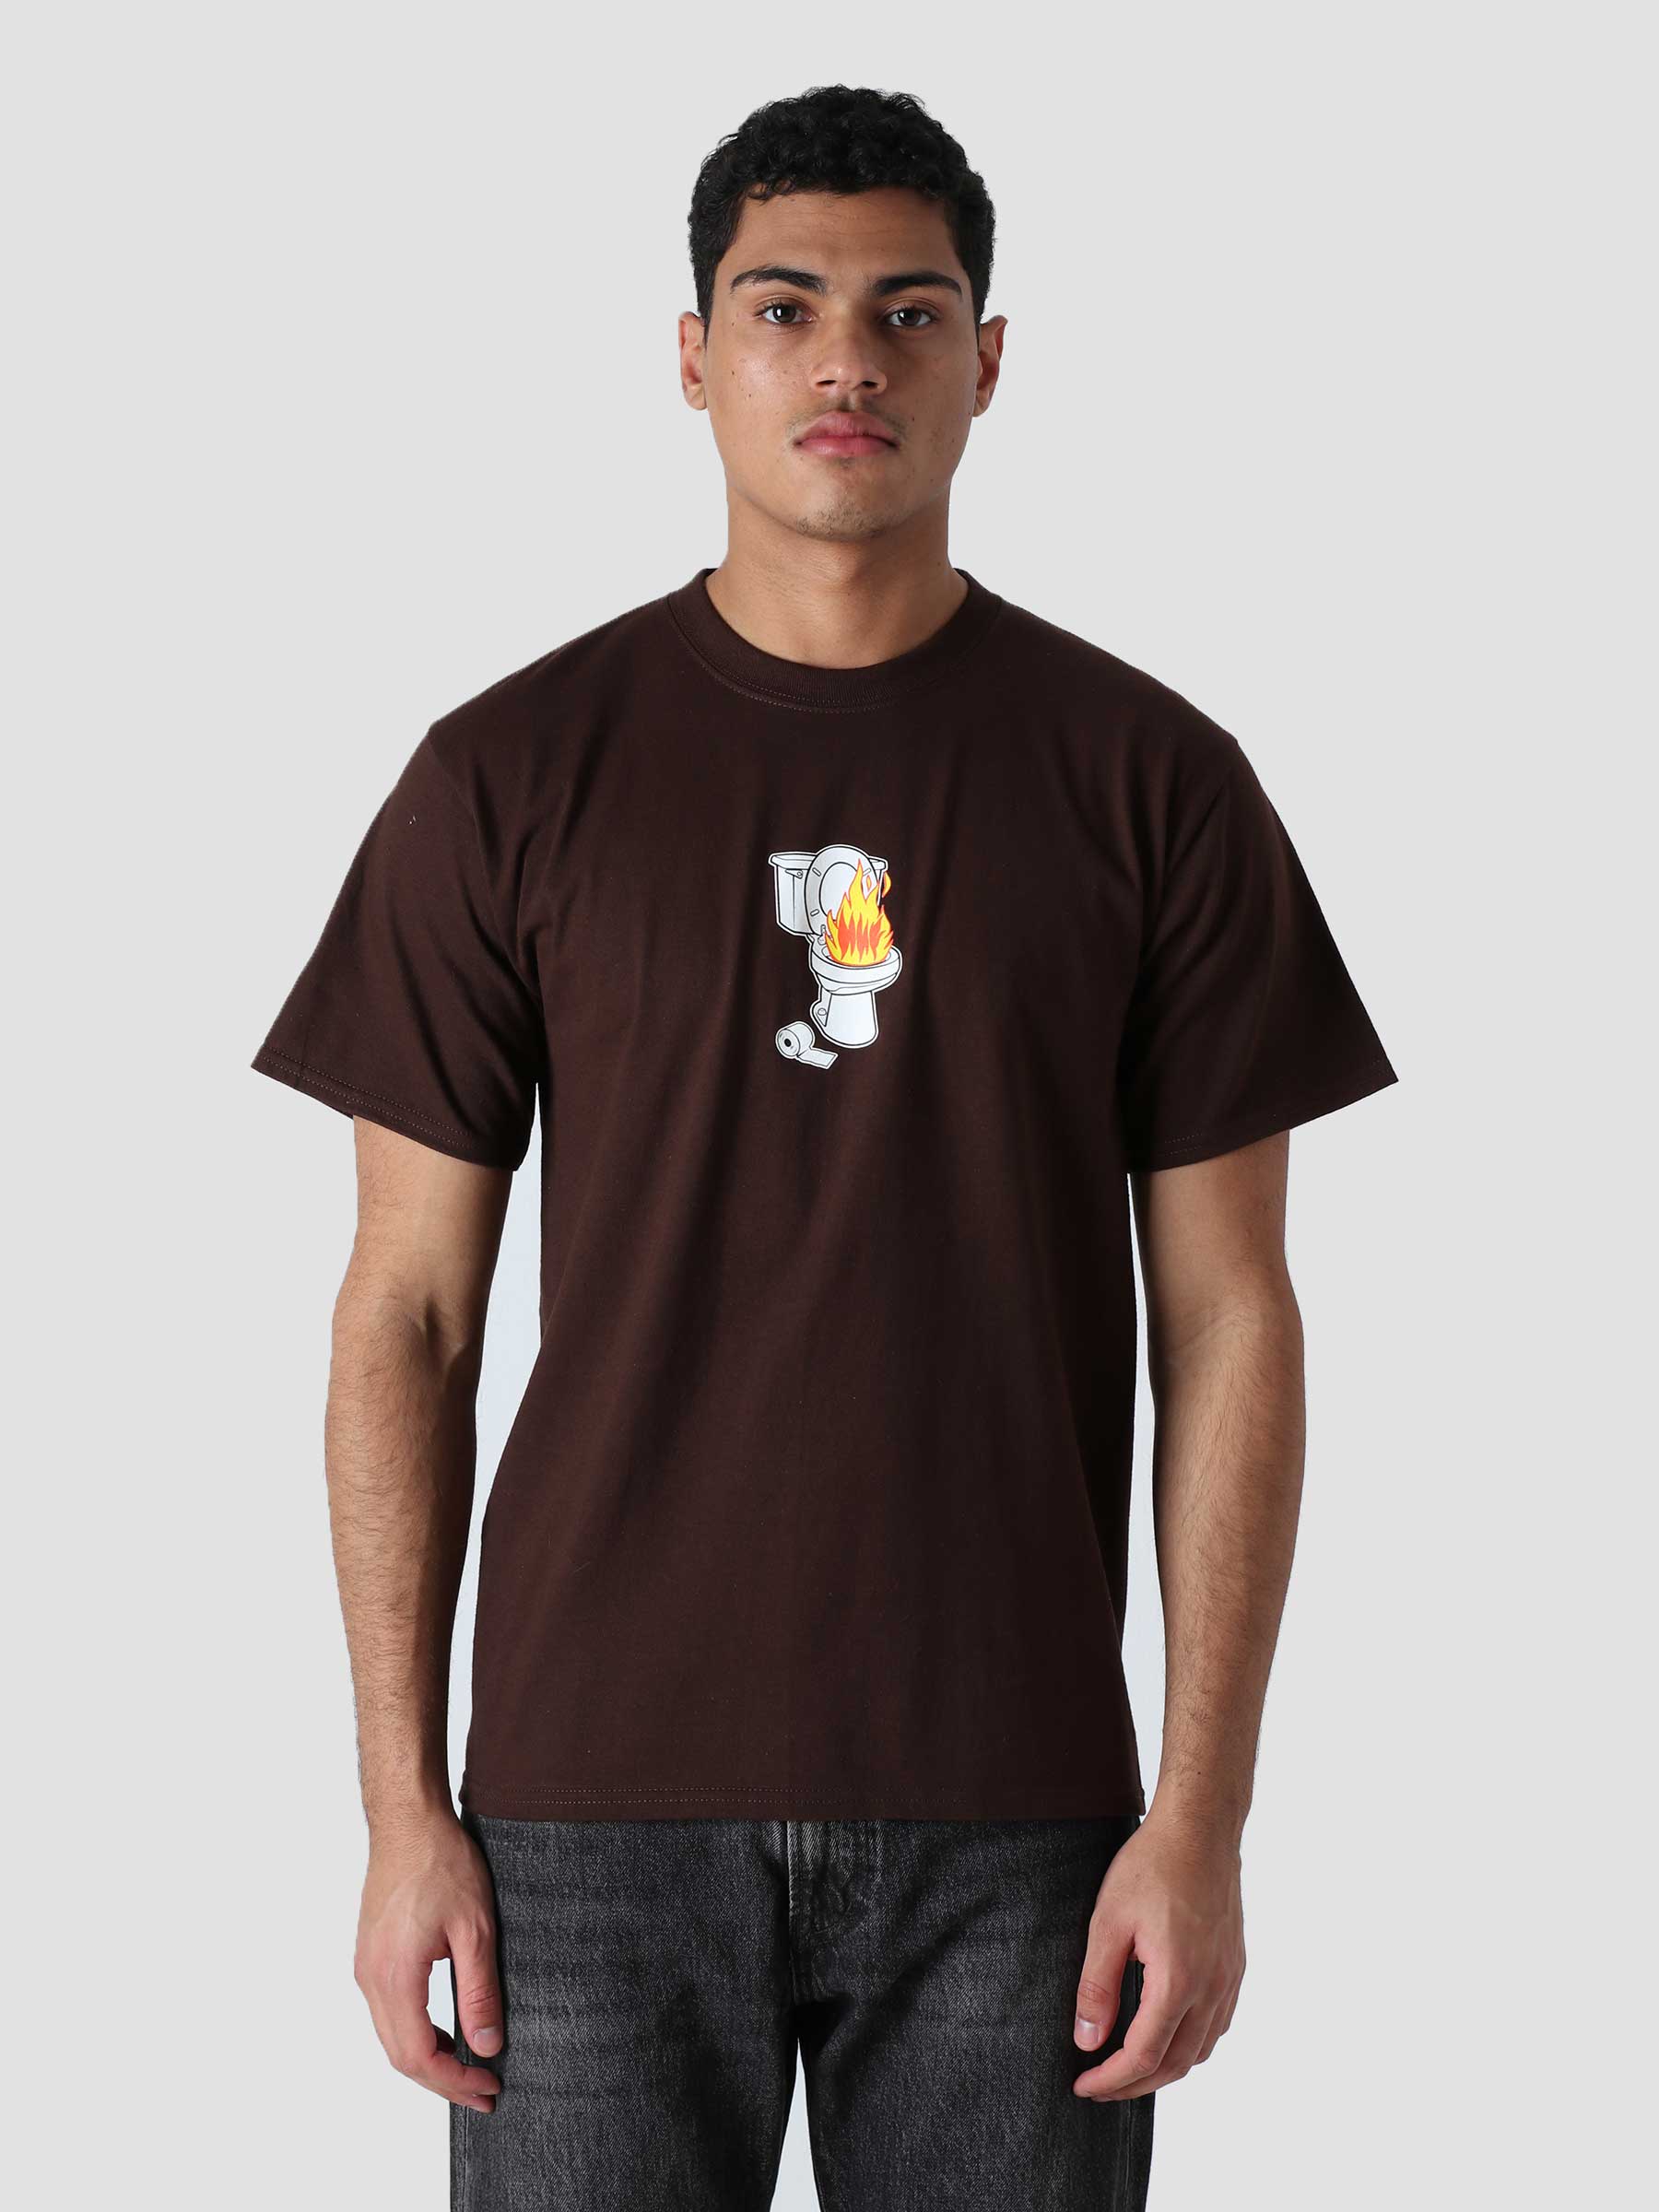 Hot Shit S/S T-Shirt Chocolate Brown TS01582